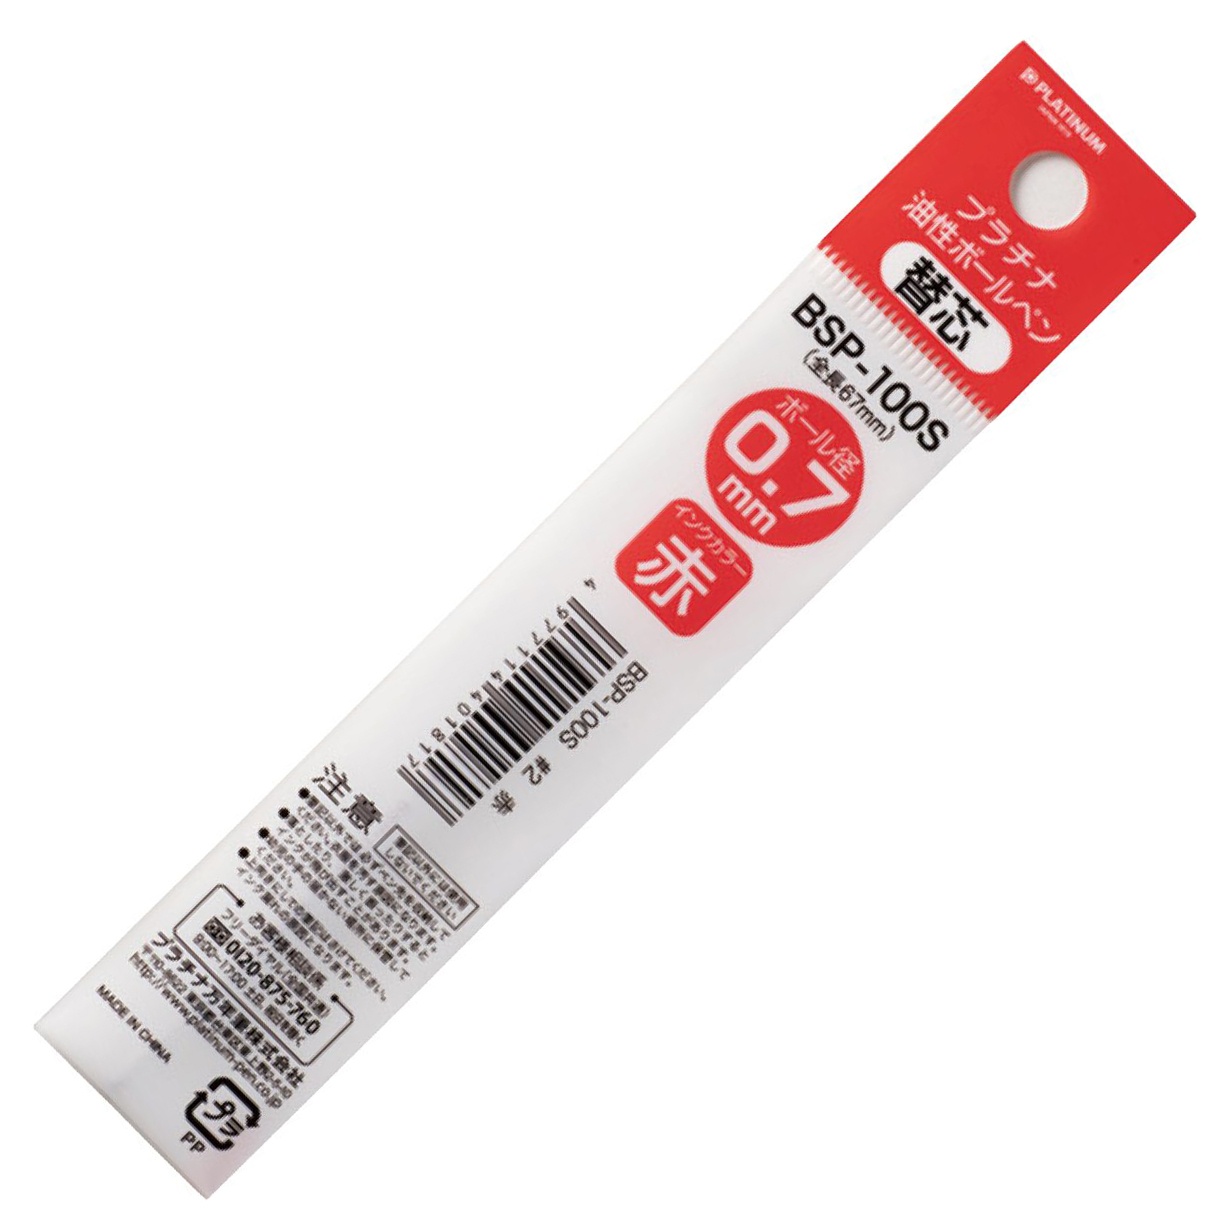 BSP-100S Ballpoint pen refill in the group Pens / Pen Accessories / Cartridges & Refills at Pen Store (109863_r)